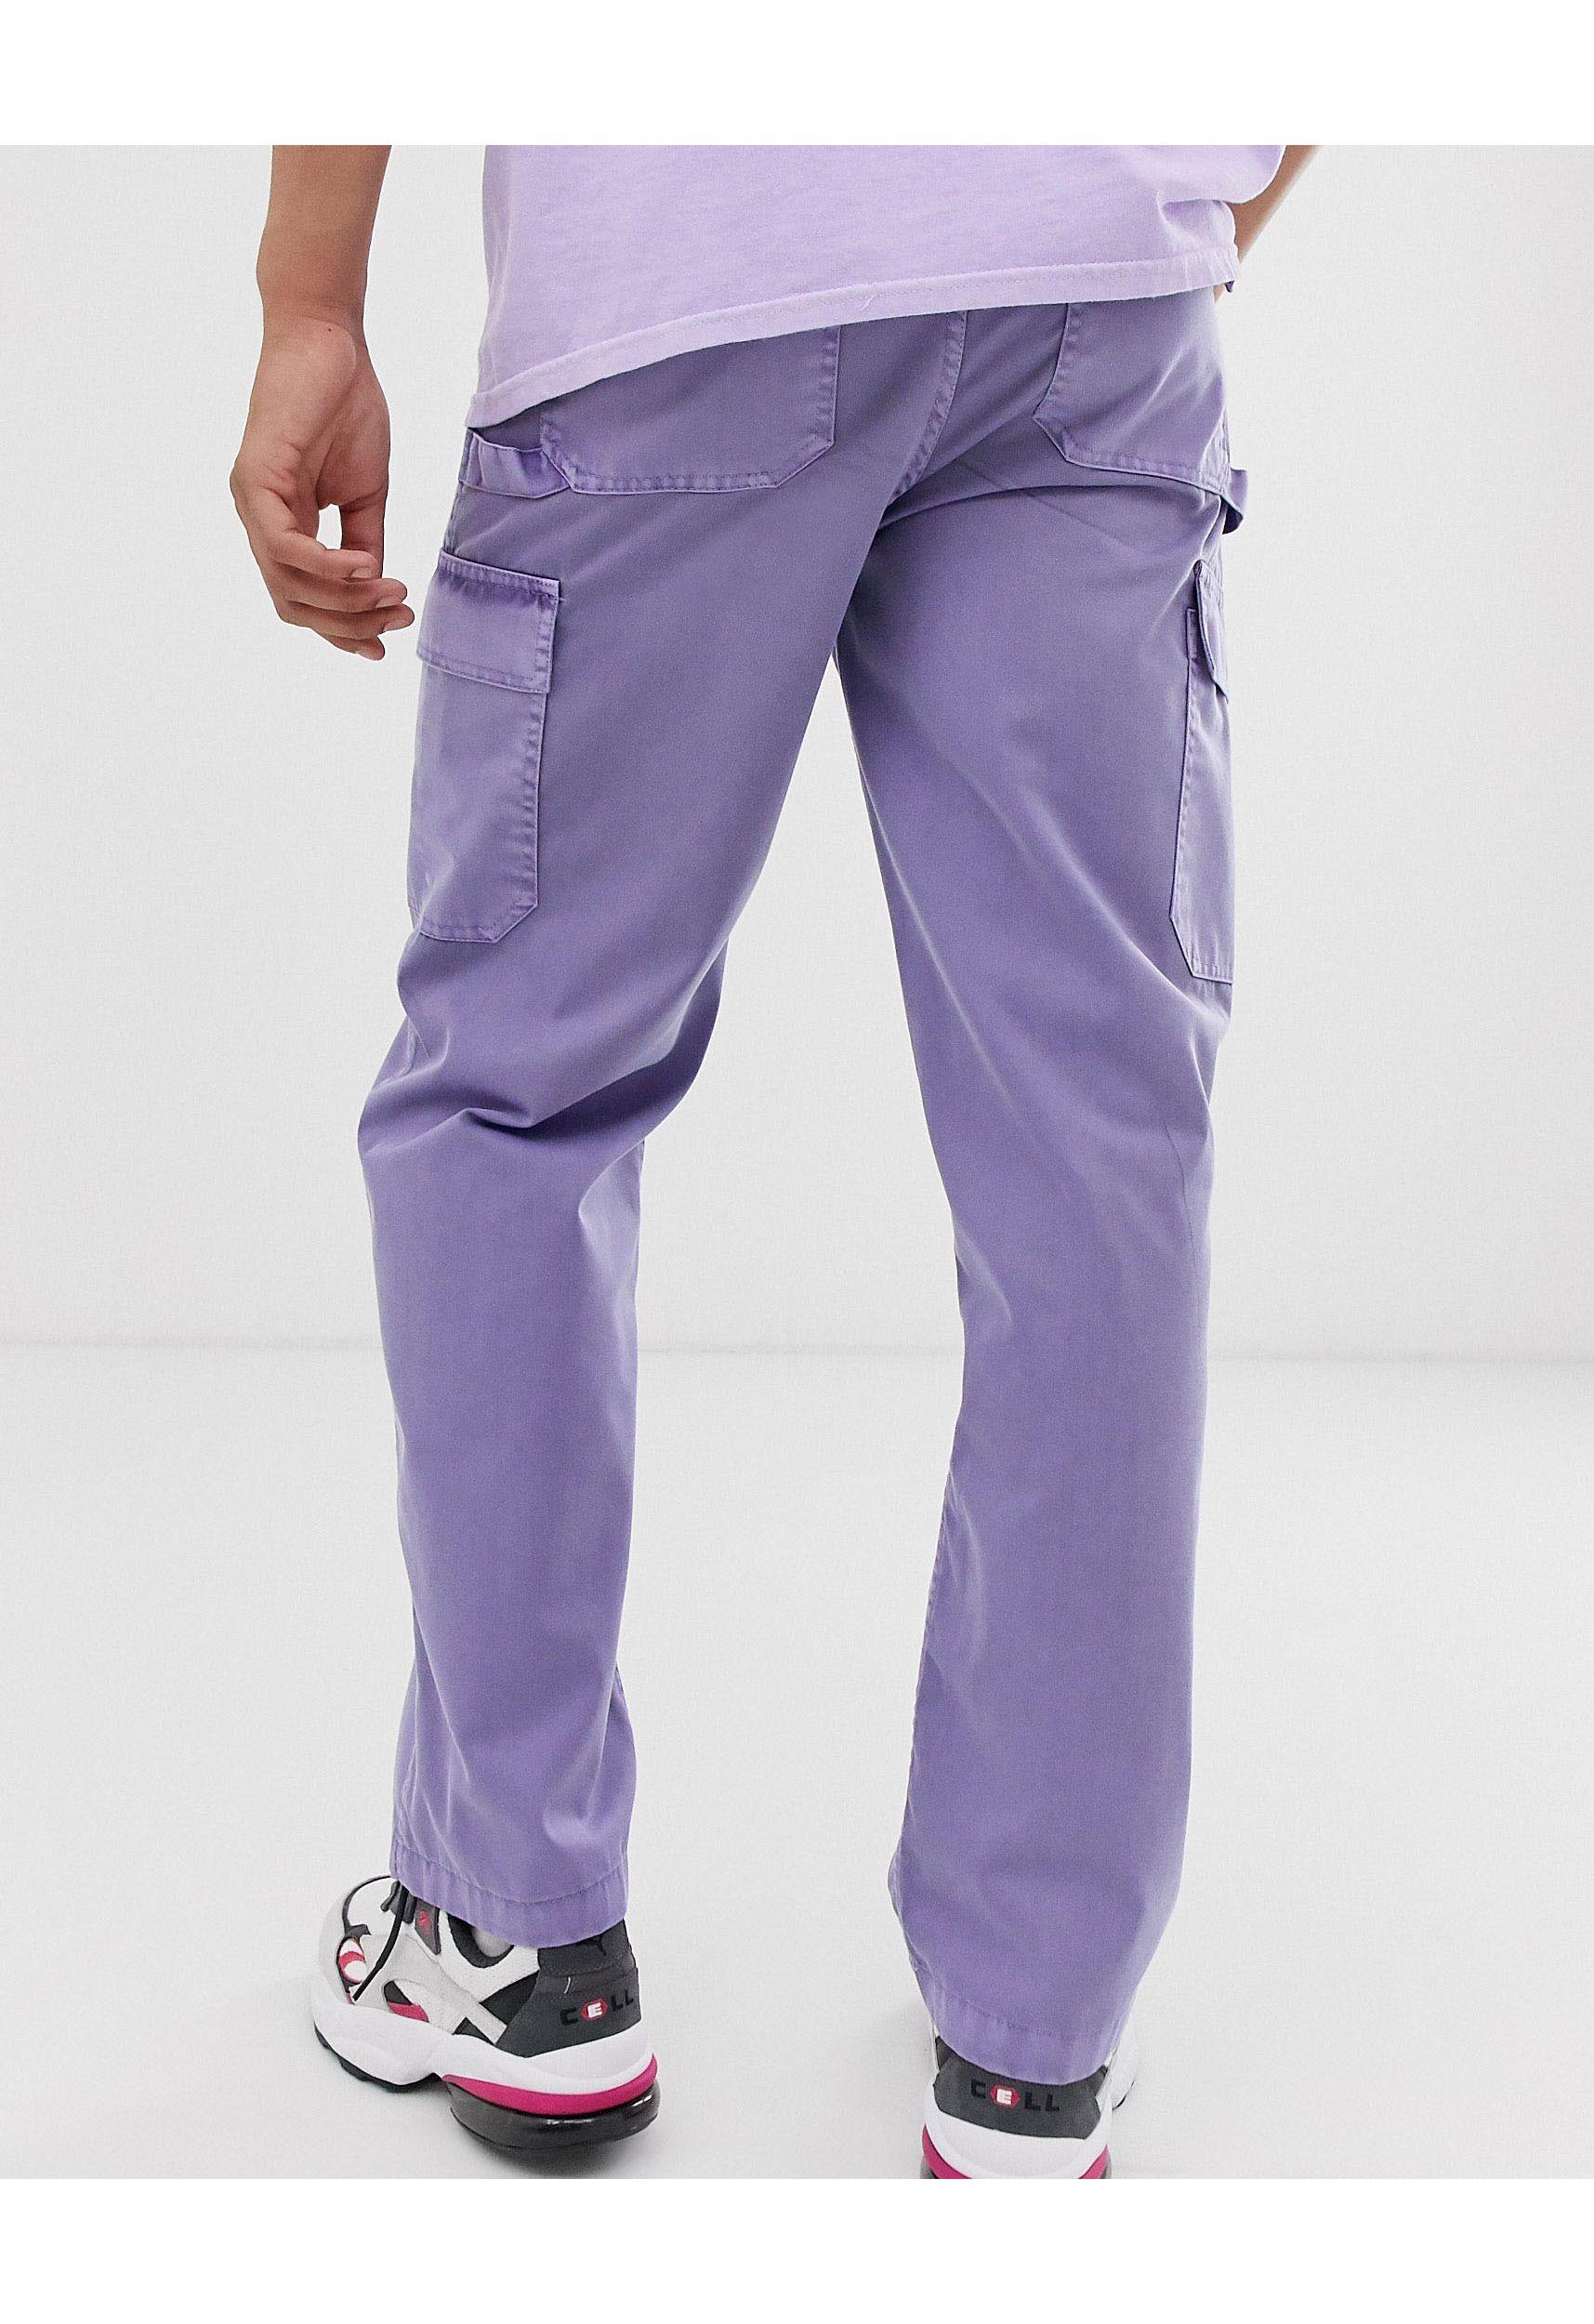 Zara - Tie-Dye Cargo Pants - Violet - Men